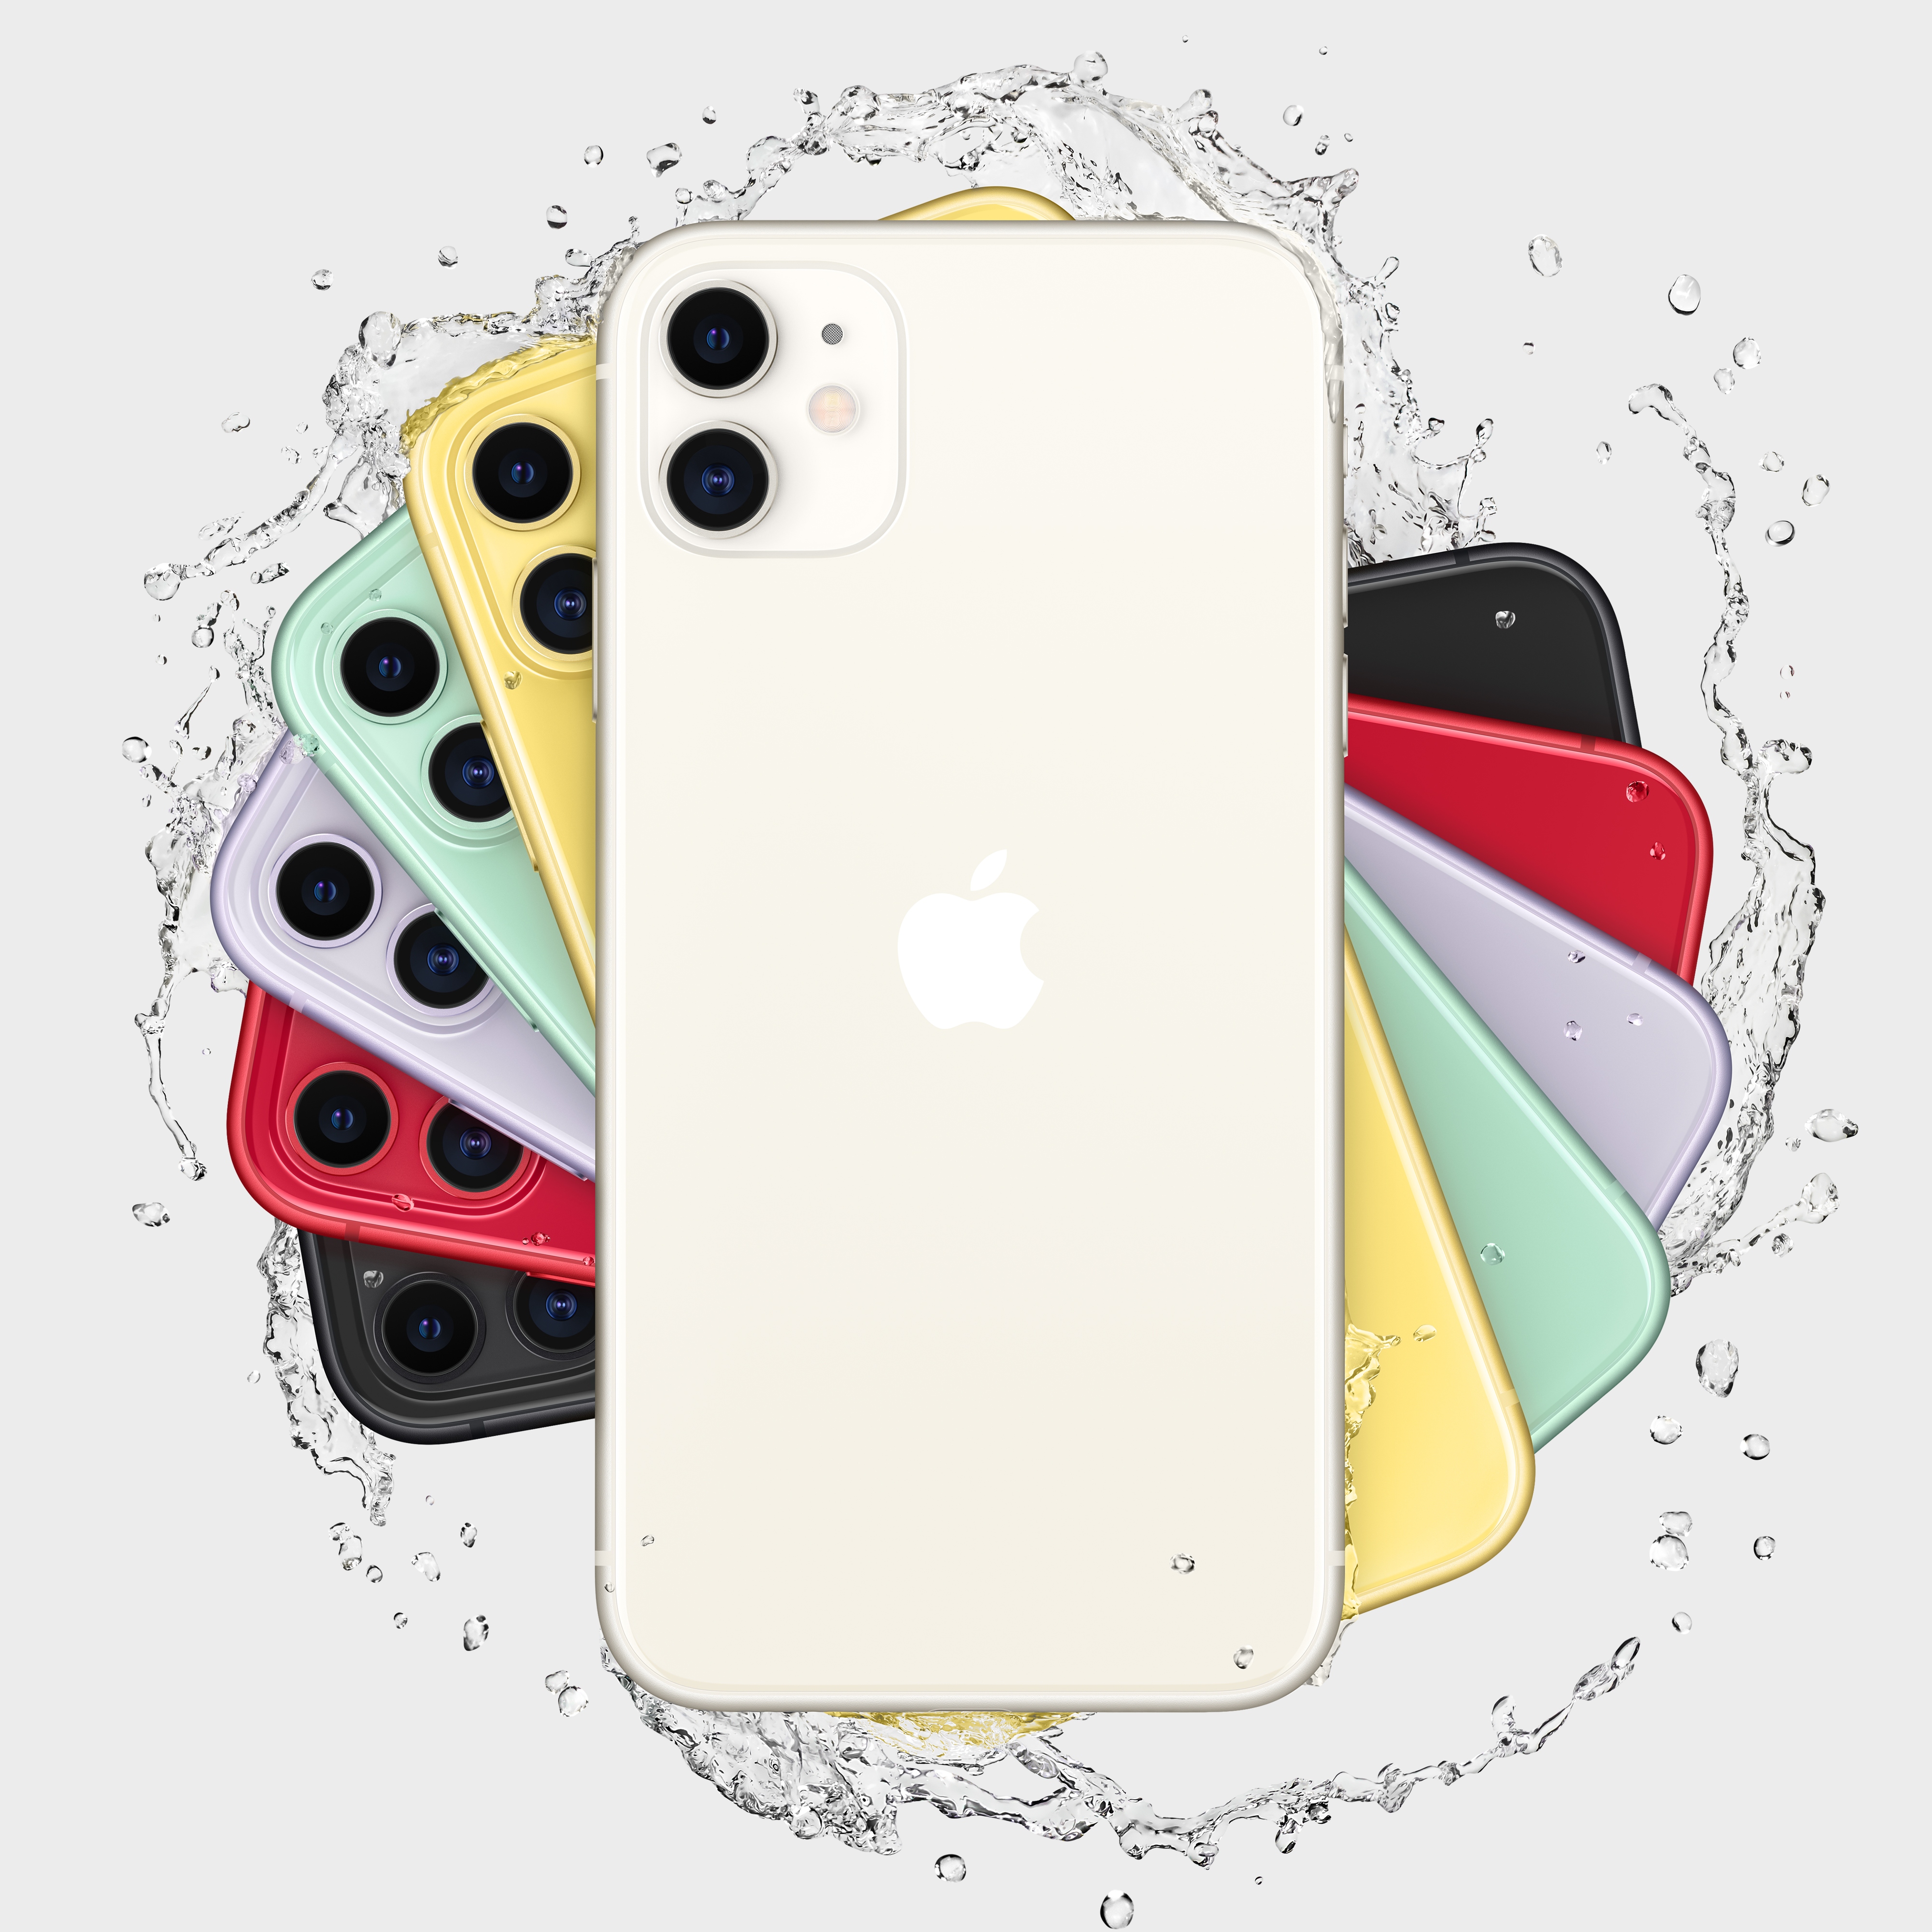 Фото — Apple iPhone 11, 128 ГБ, белый, новая комплектация